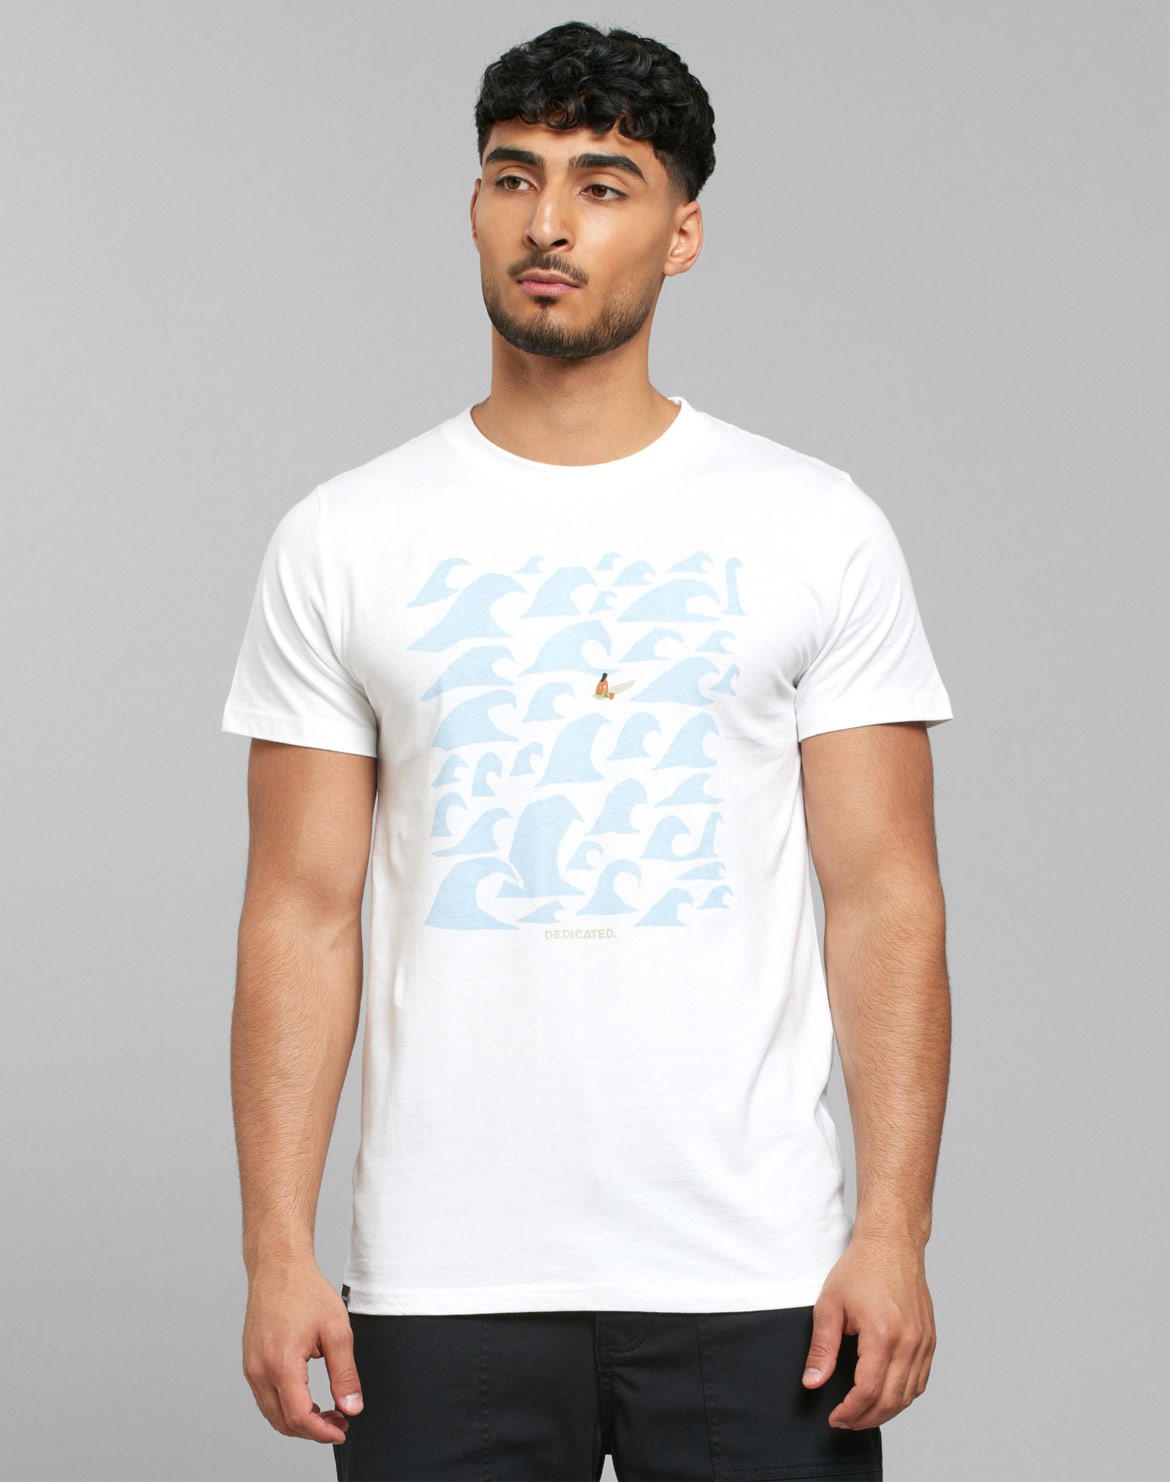 Stockholm Lone Surfer T-Shirt